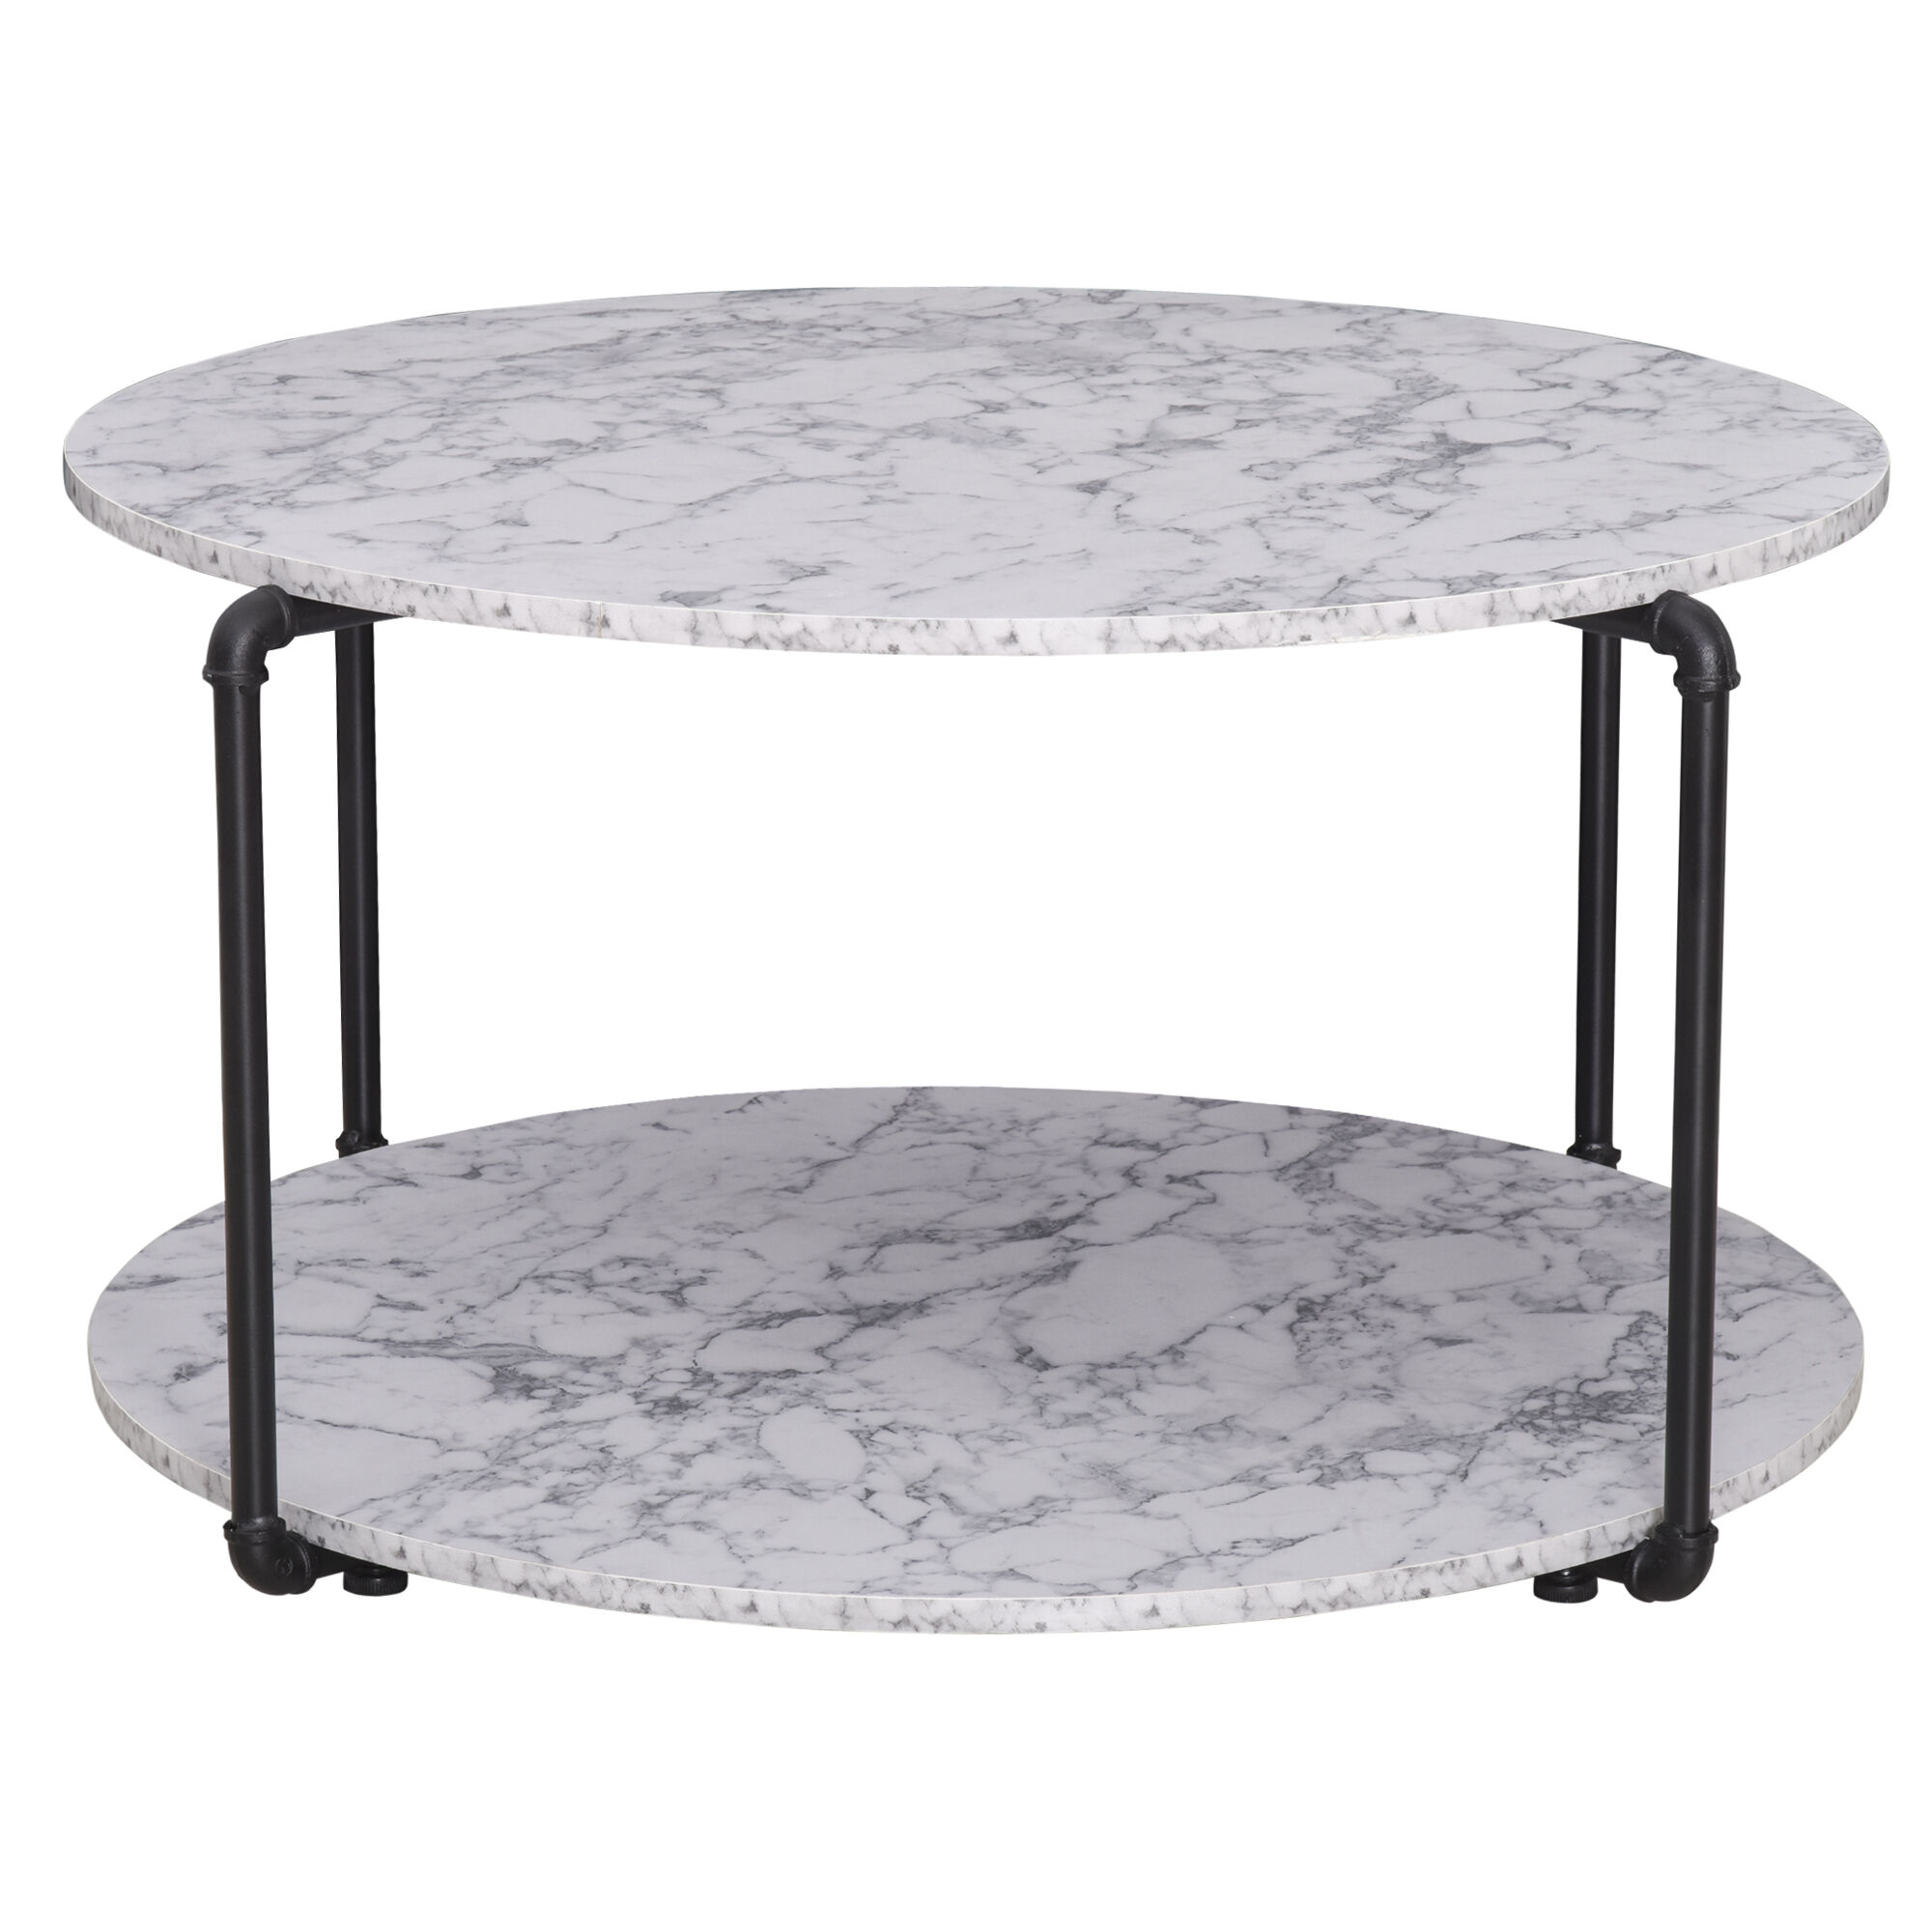 Homcom Table basse ronde avec étagère imitation marbre blanc métal noir Blanc 80x45x80cm